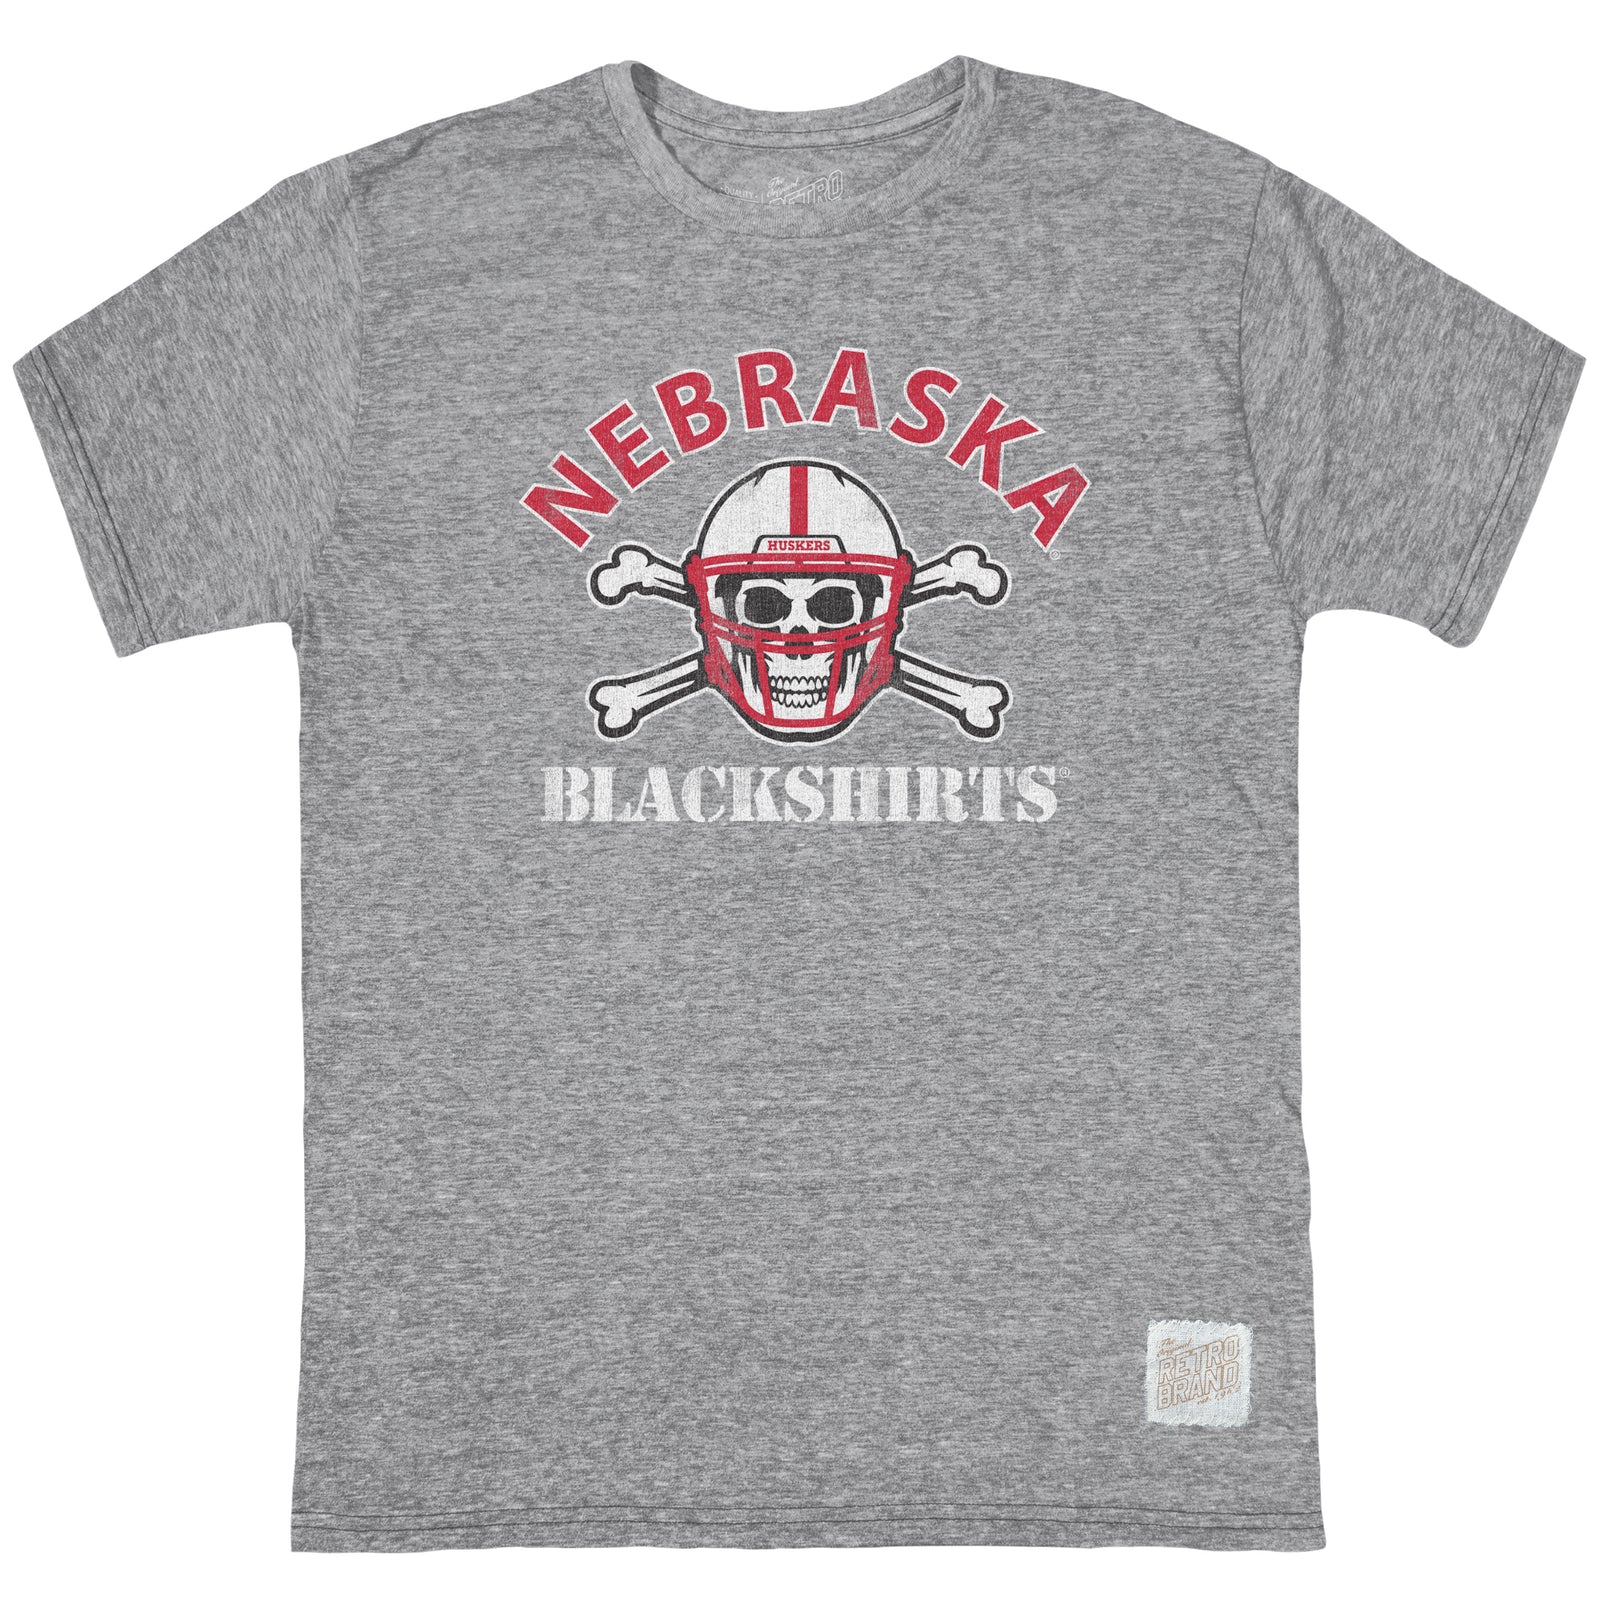 Nebraska Cornhuskers Blackshirts Tri-Blend Unisex Tee